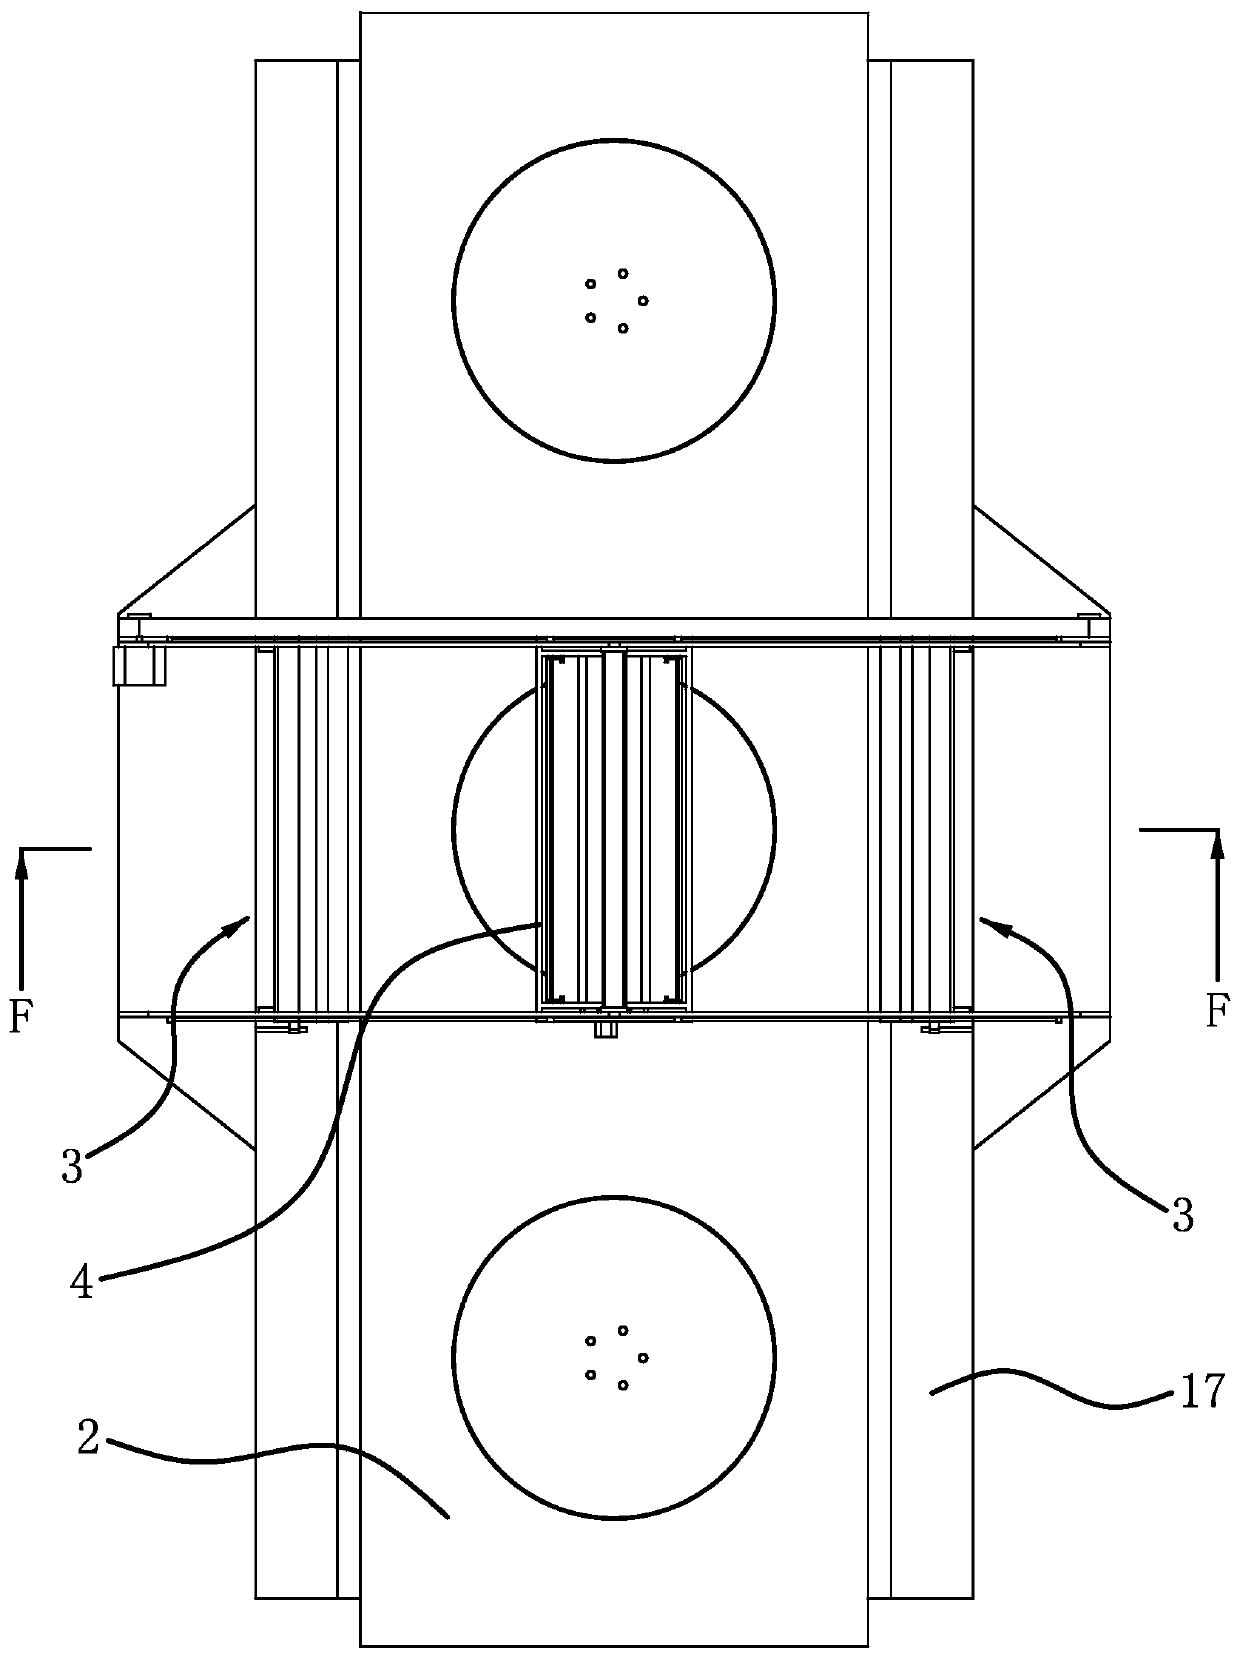 A hub cover film coating robot